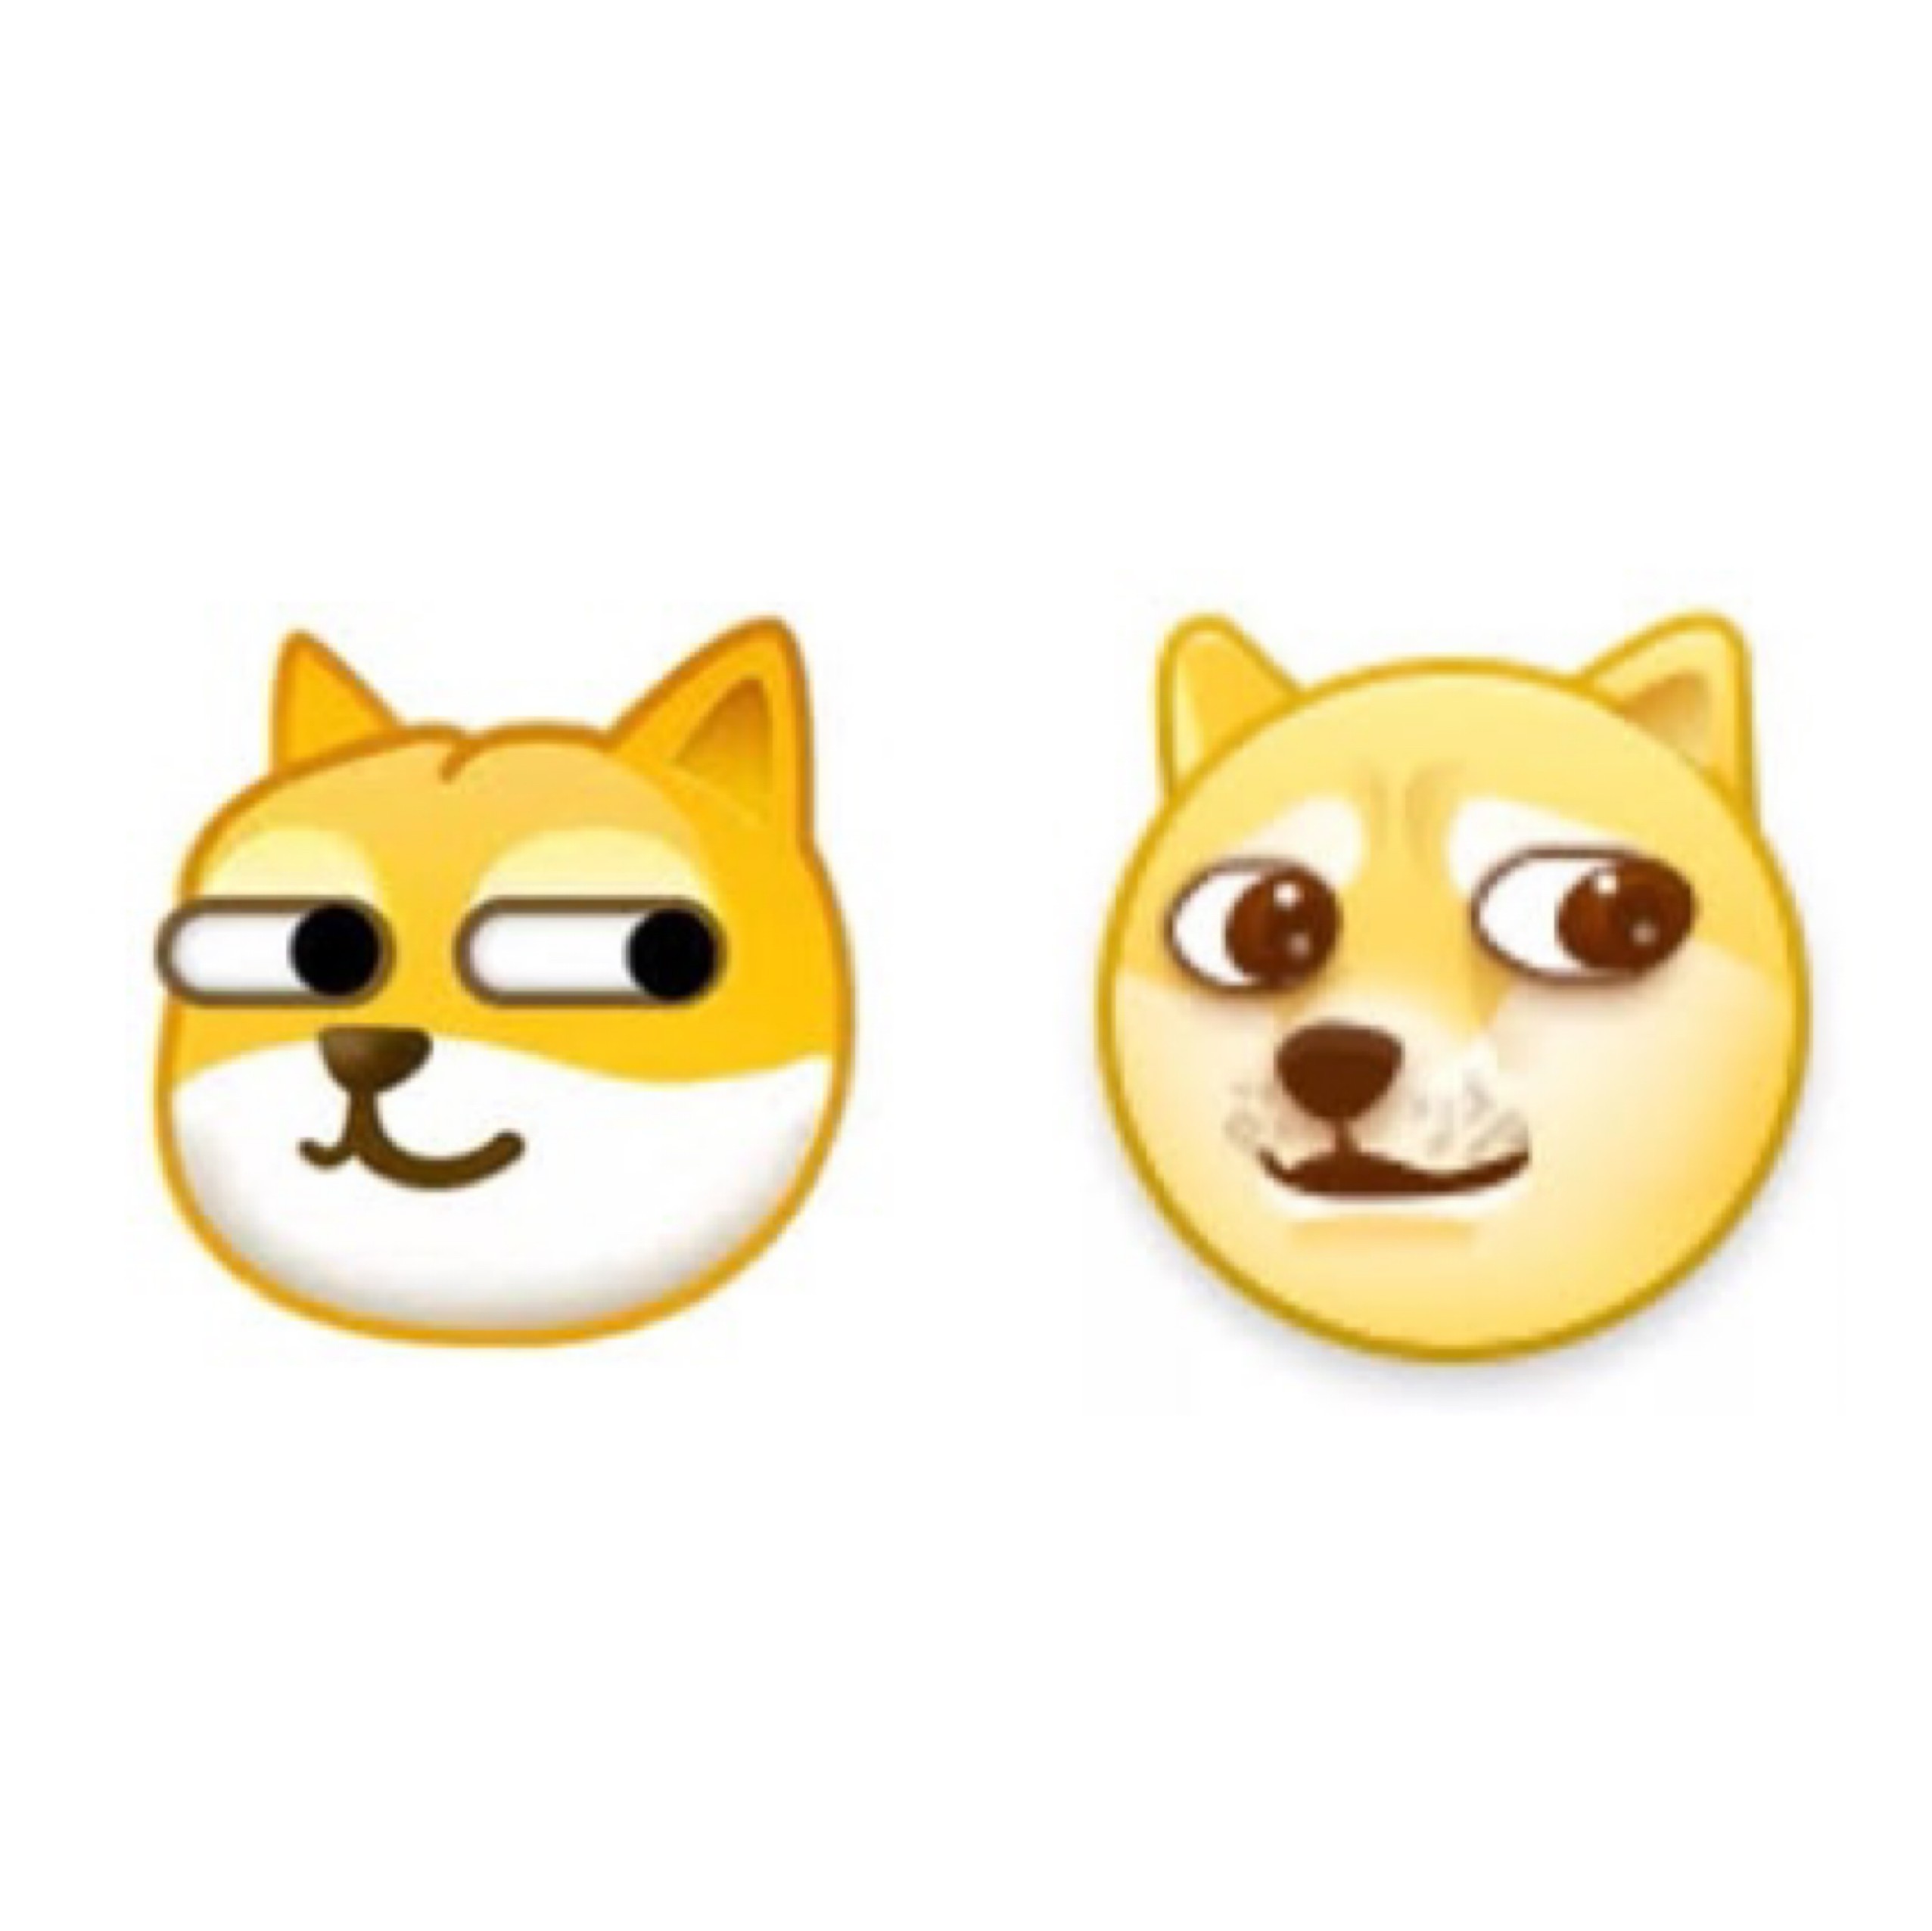 Free Emoji PNG doge images, page 4 - bitcoinlog.fun